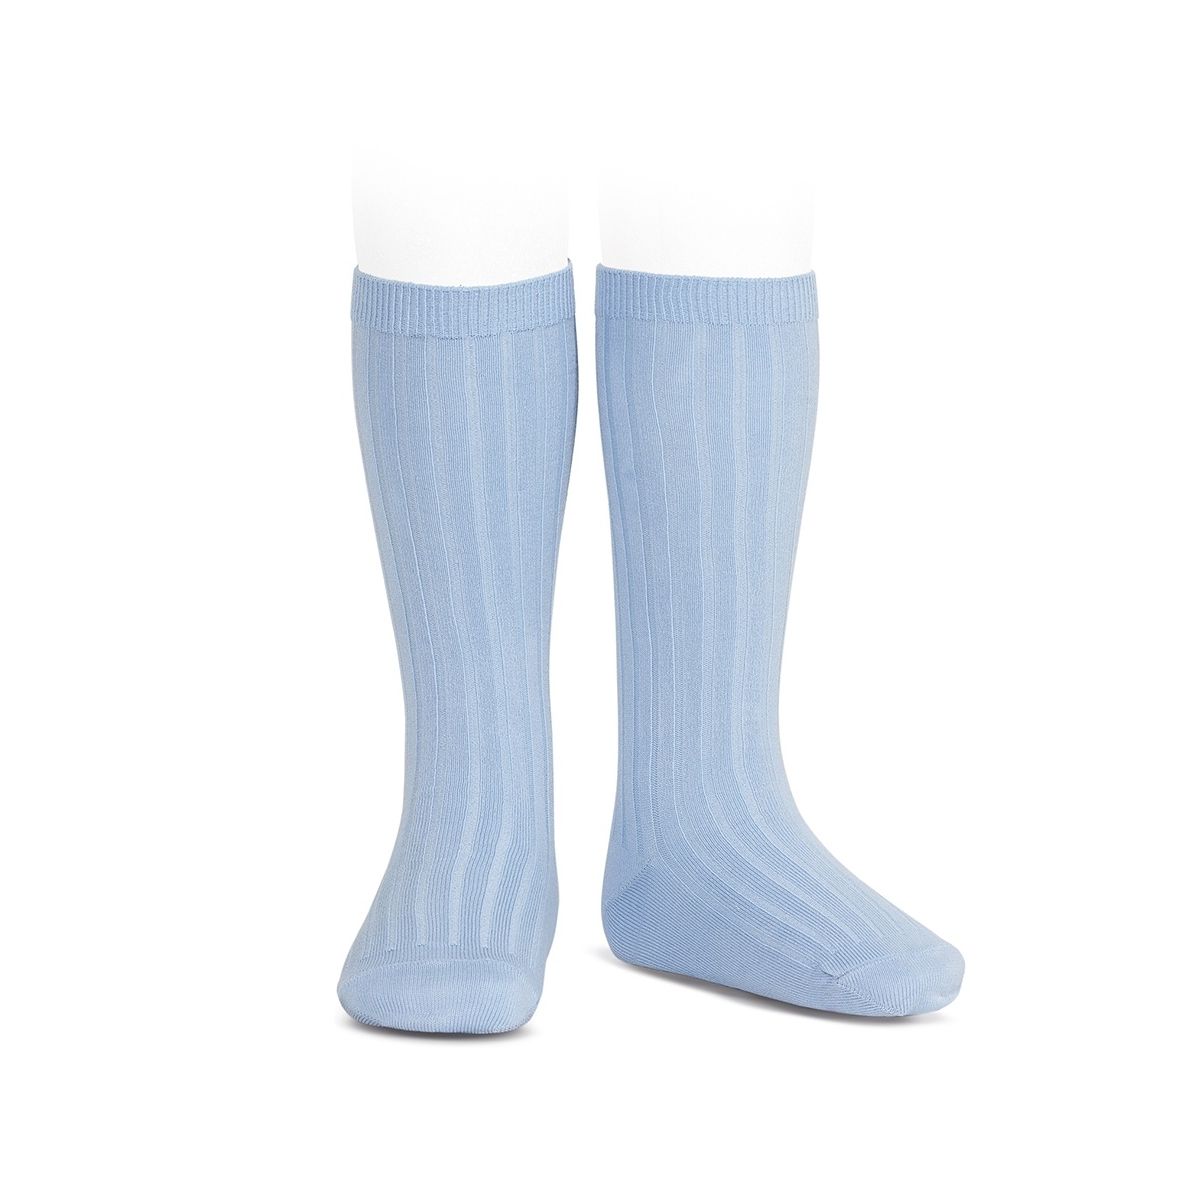 Condor - Wide Ribbed Cotton Knee High Socks light blue - Medias